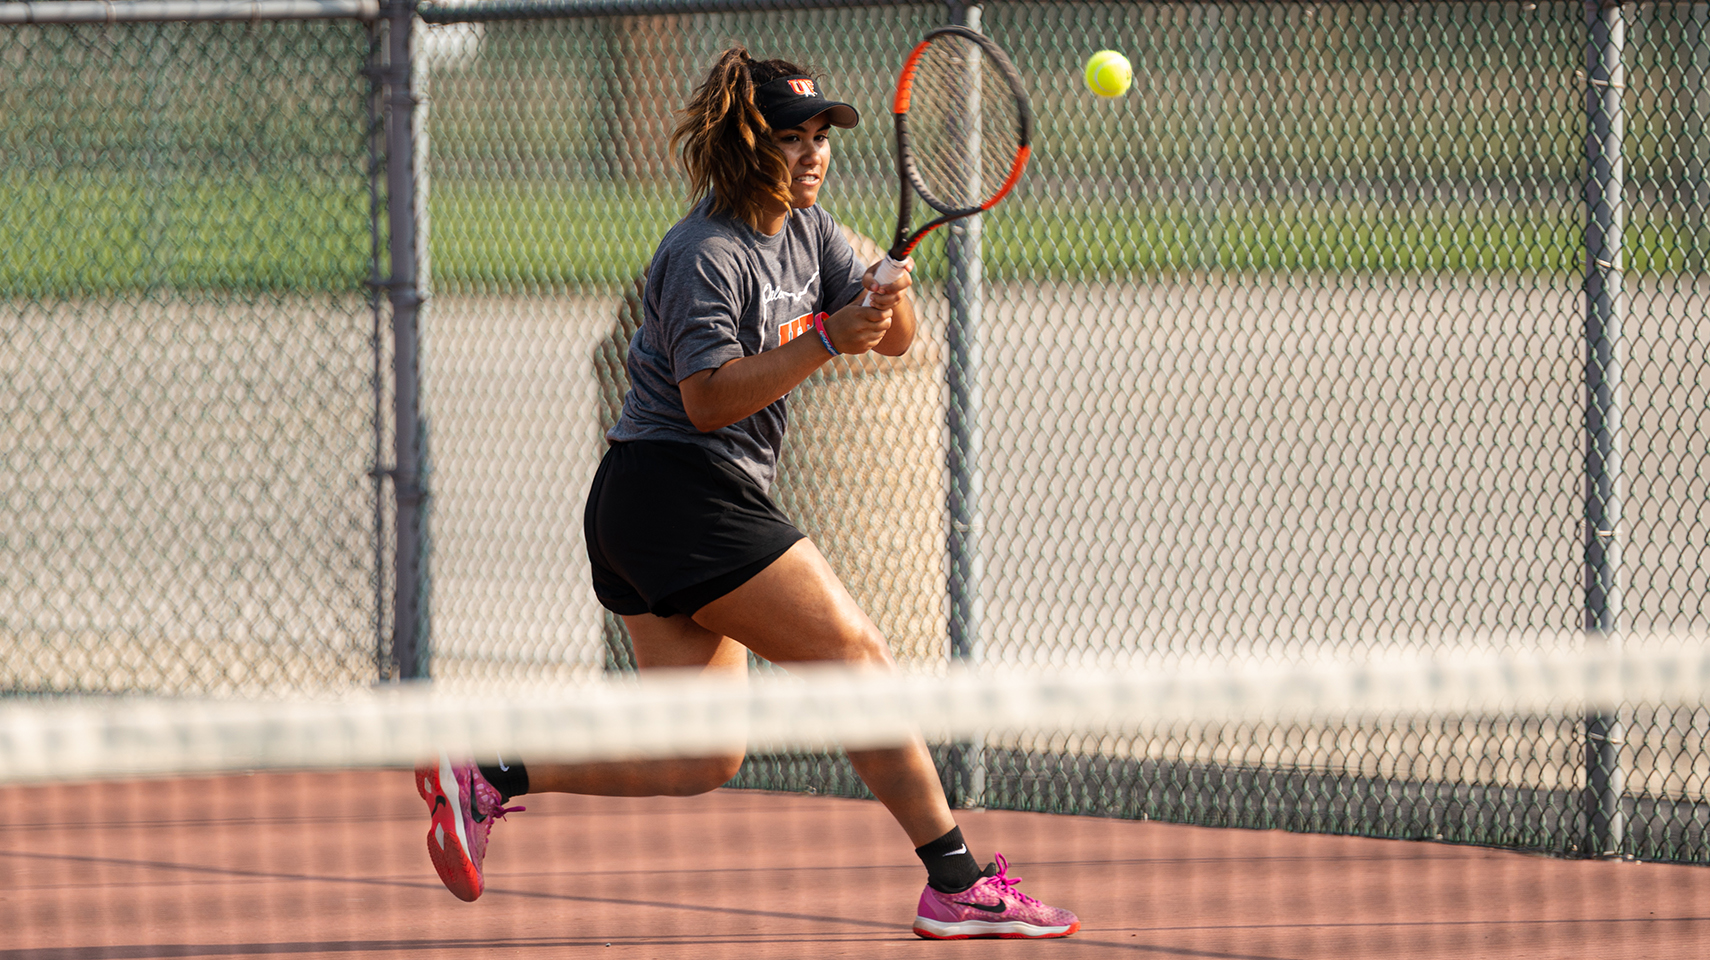 Women's tennis player hitting the ball outside 